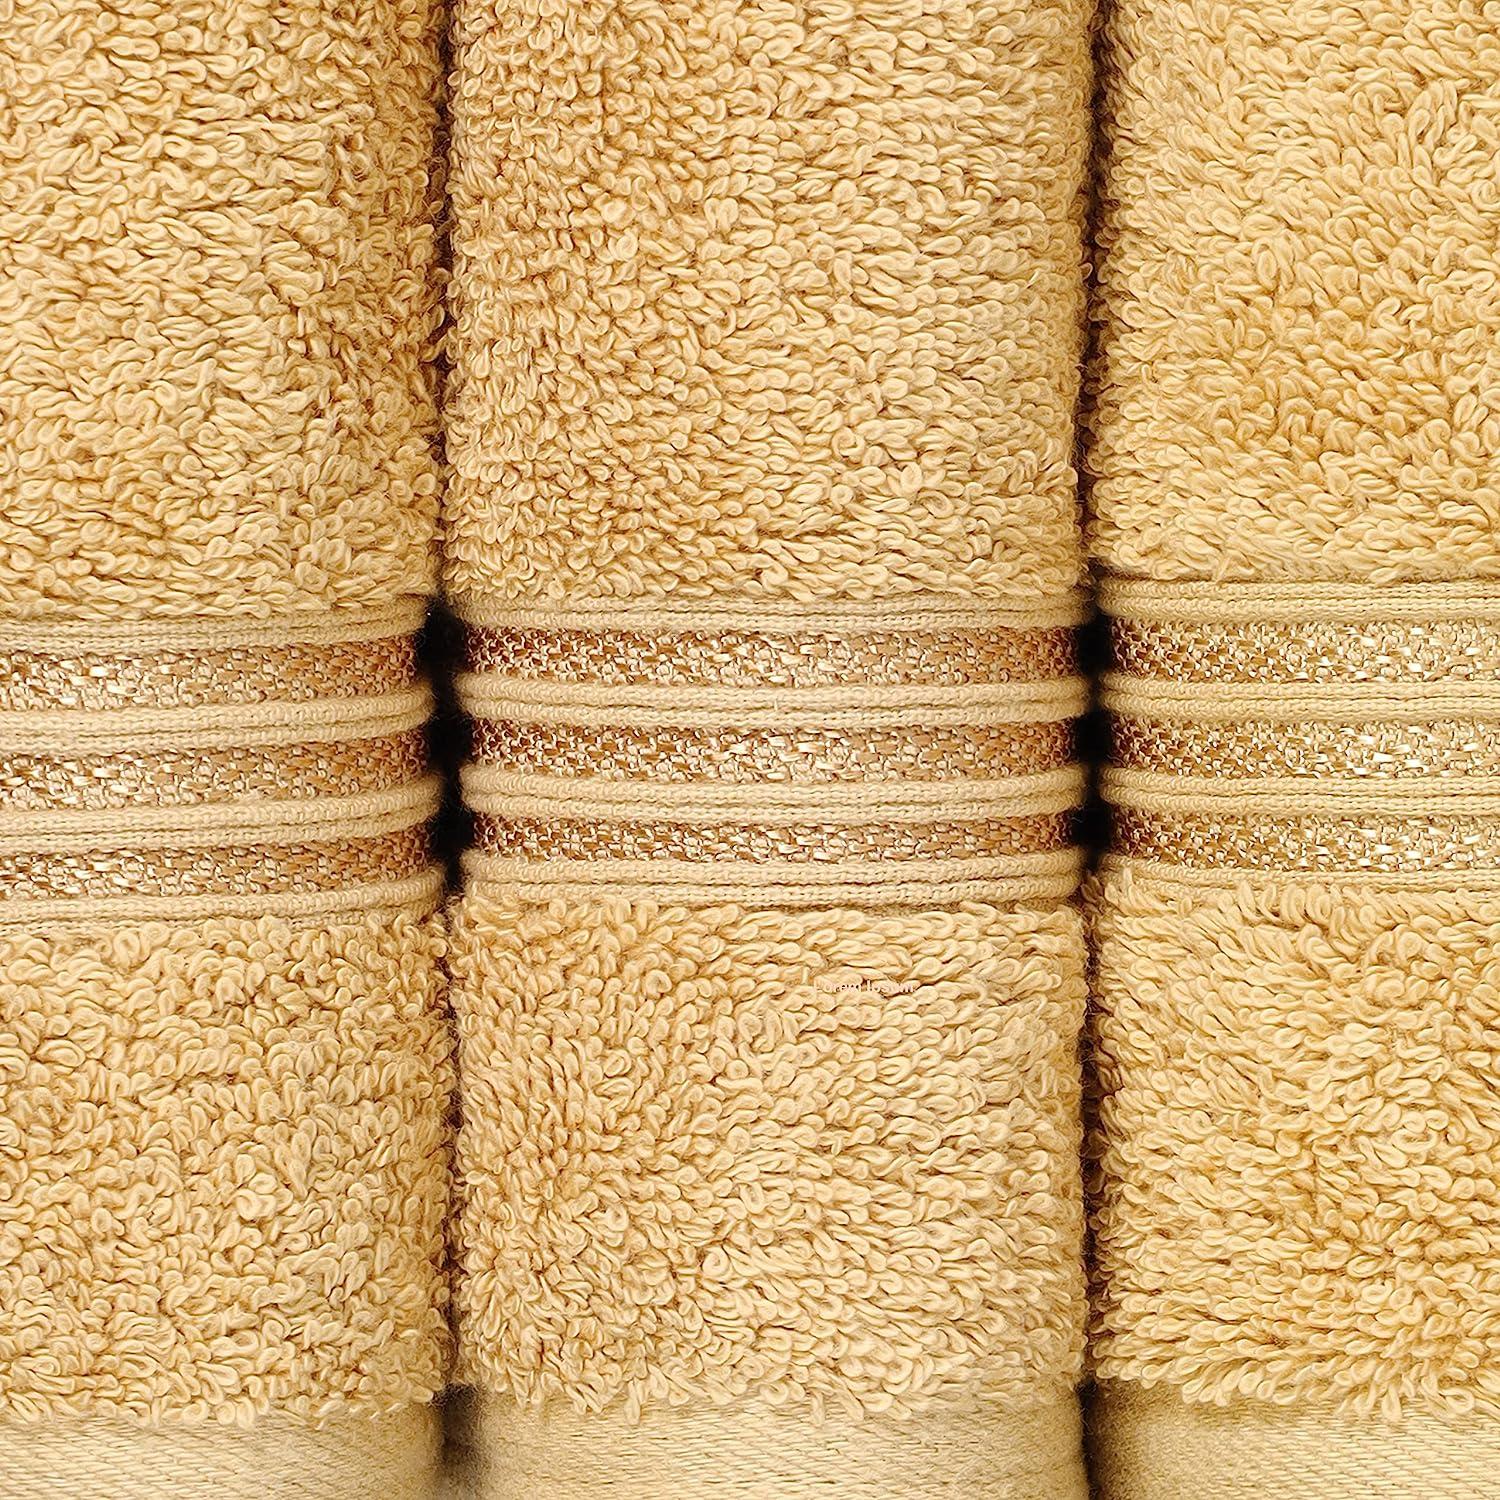 SUPERIOR Luxury Cotton Bath Towel Set - 6-Piece Towel Set, Premium Egyptian  Cotton Towels, Gold Gold 6PC Set